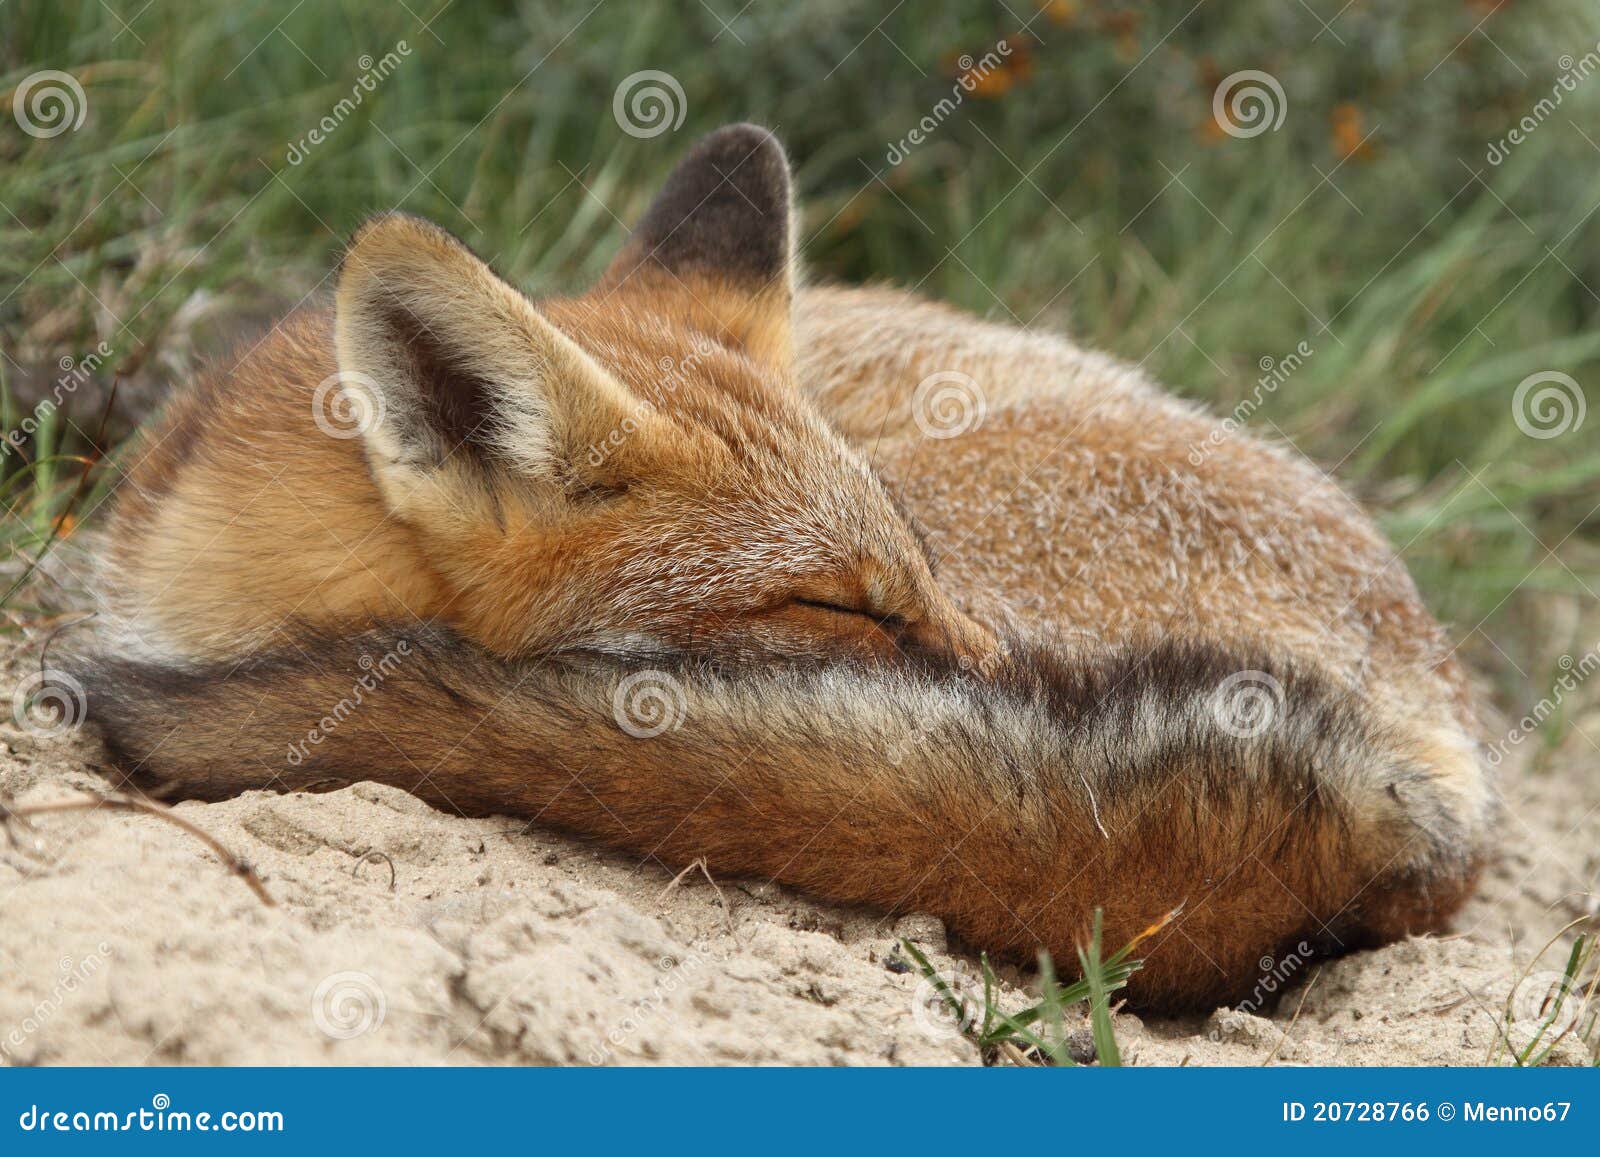 sleeping-red-fox-cub-20728766.jpg